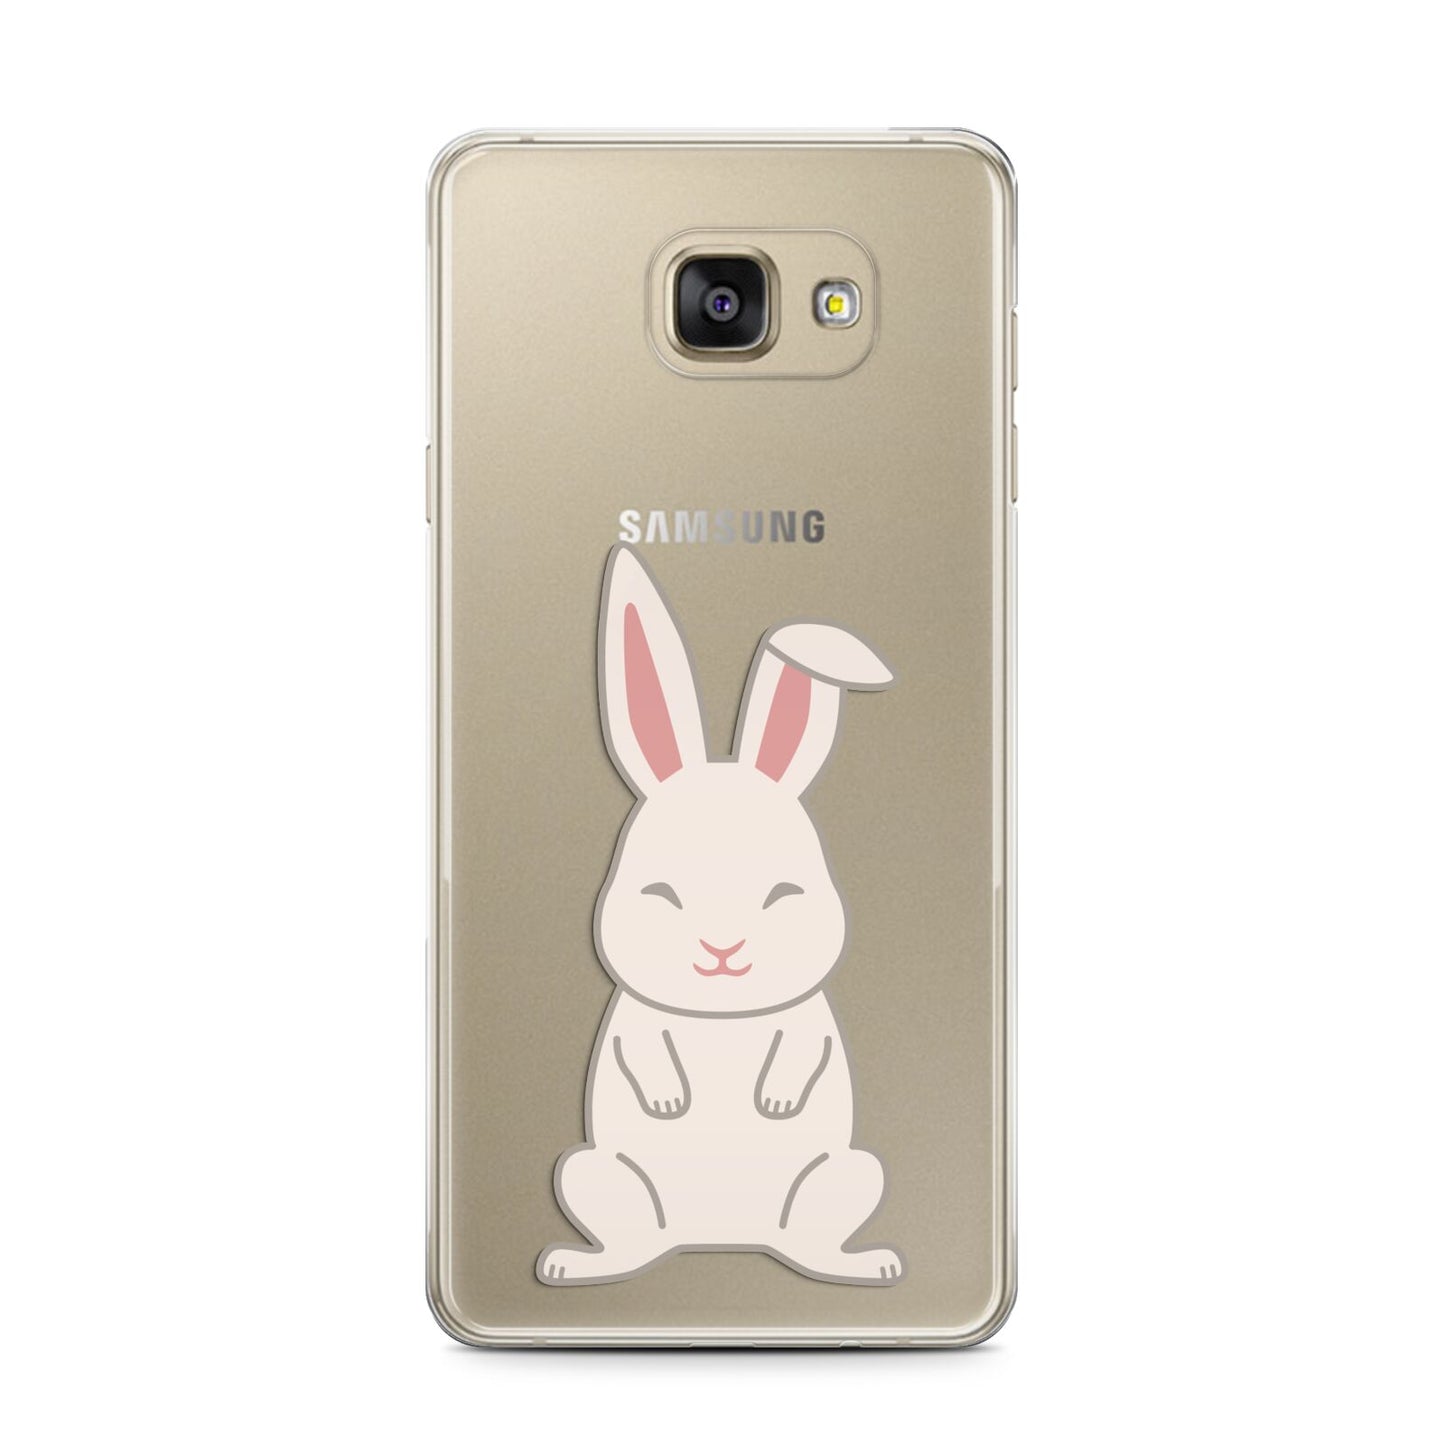 Bunny Samsung Galaxy A7 2016 Case on gold phone